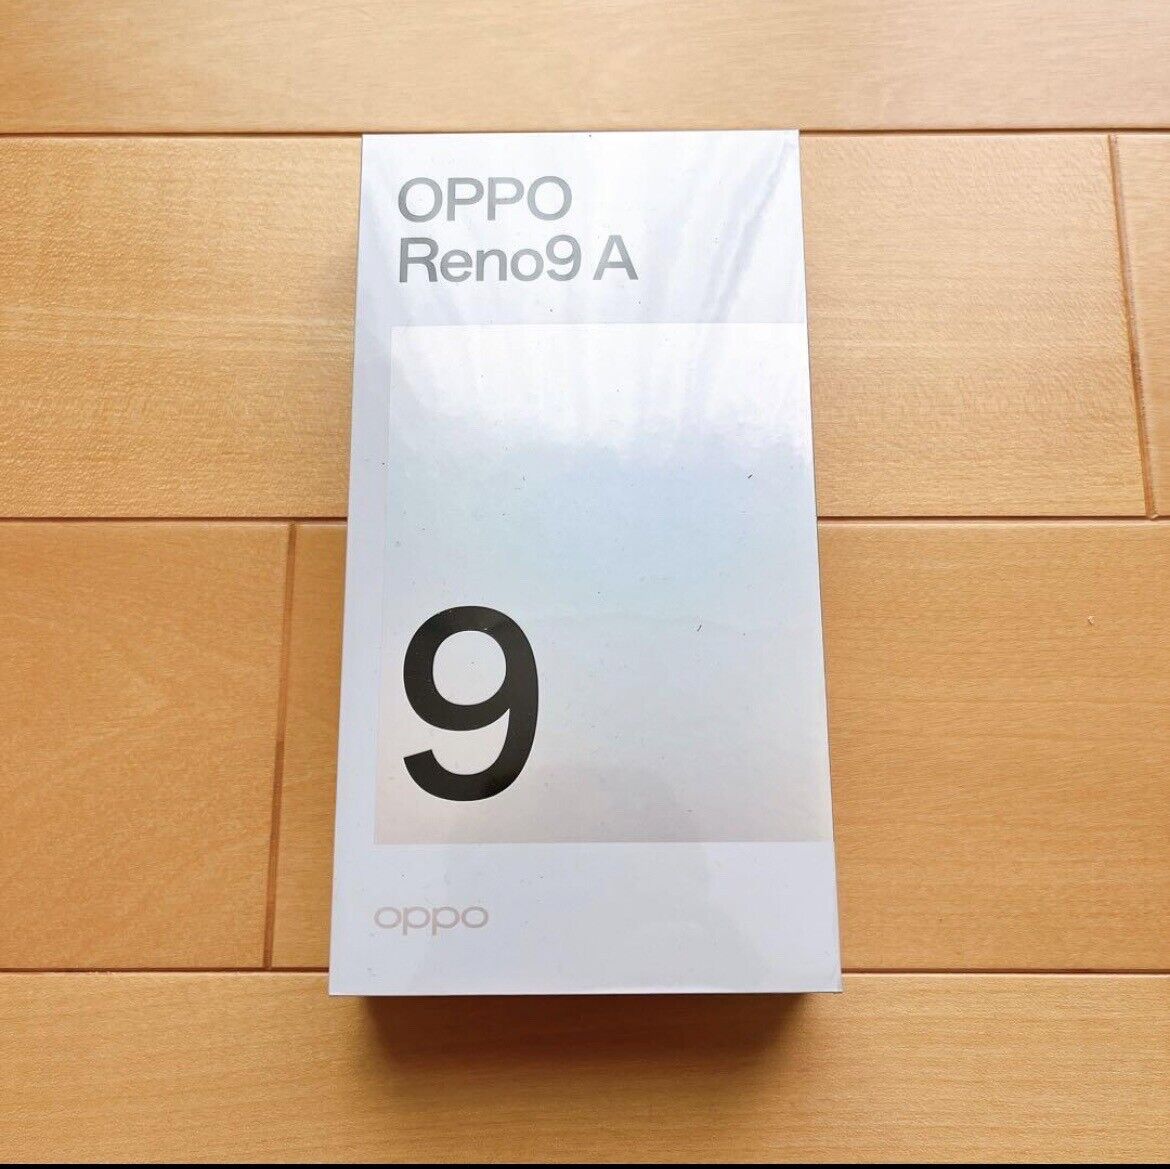 OPPO reno 9a 128GB -White- | eBay